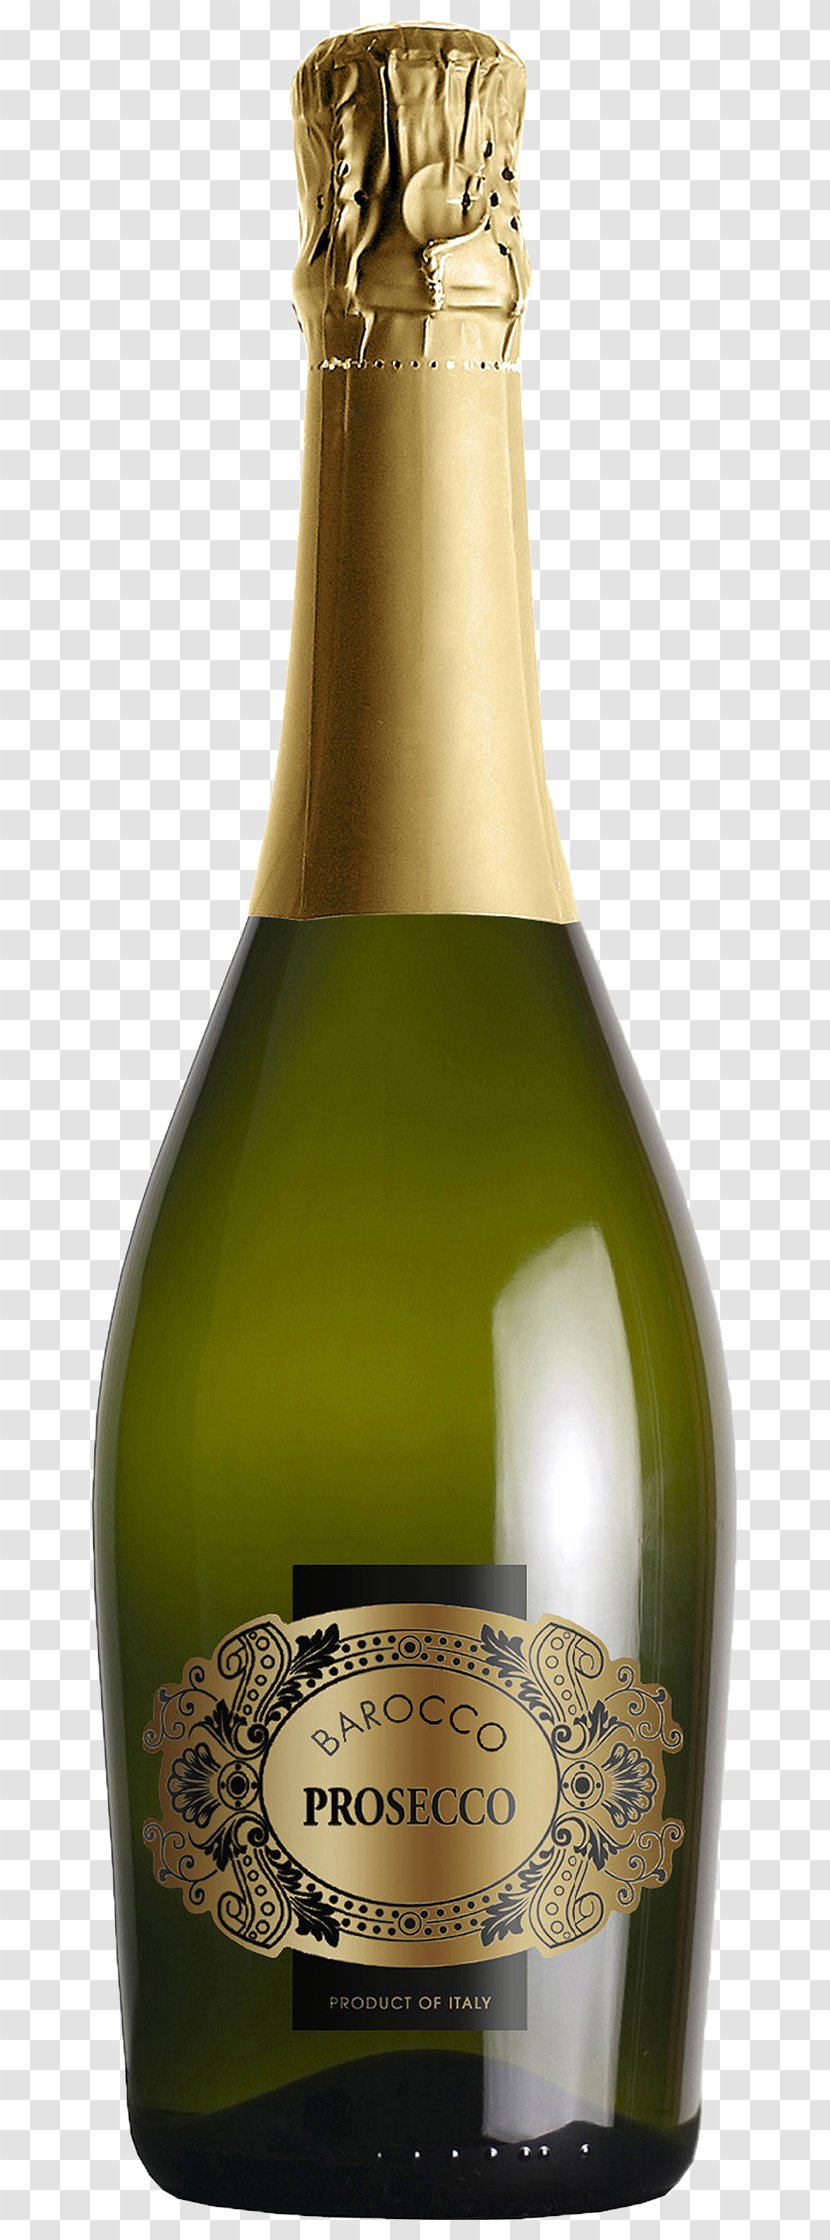 Champagne Prosecco Sparkling Wine Glera - Sparkle Grape Juice Bottles Transparent PNG